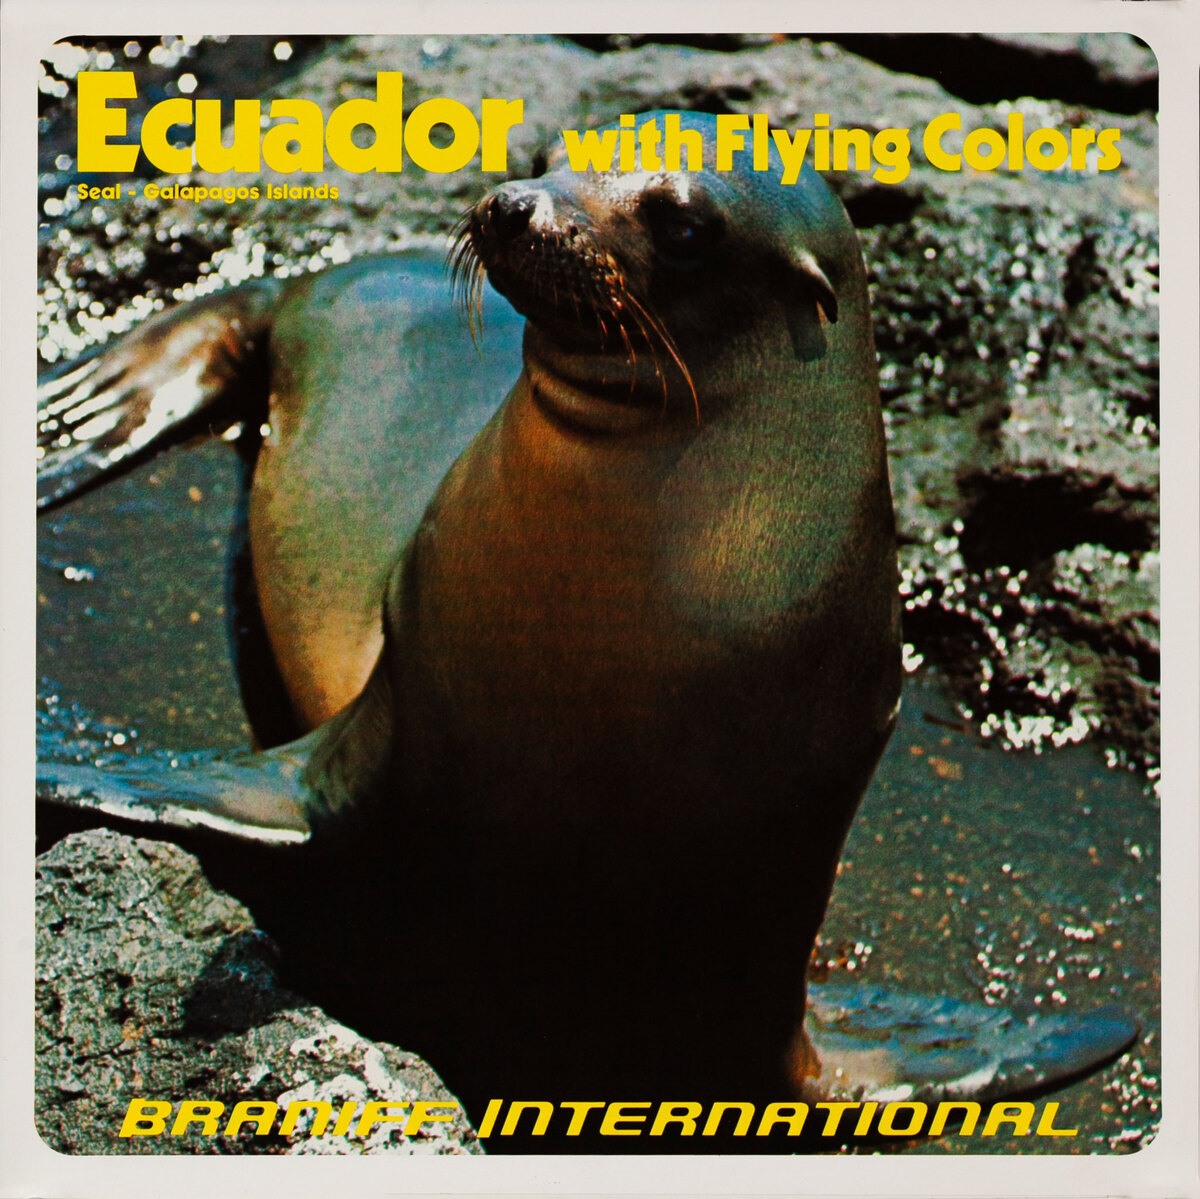 Braniff International - Ecuador Seal Galapagos Islands